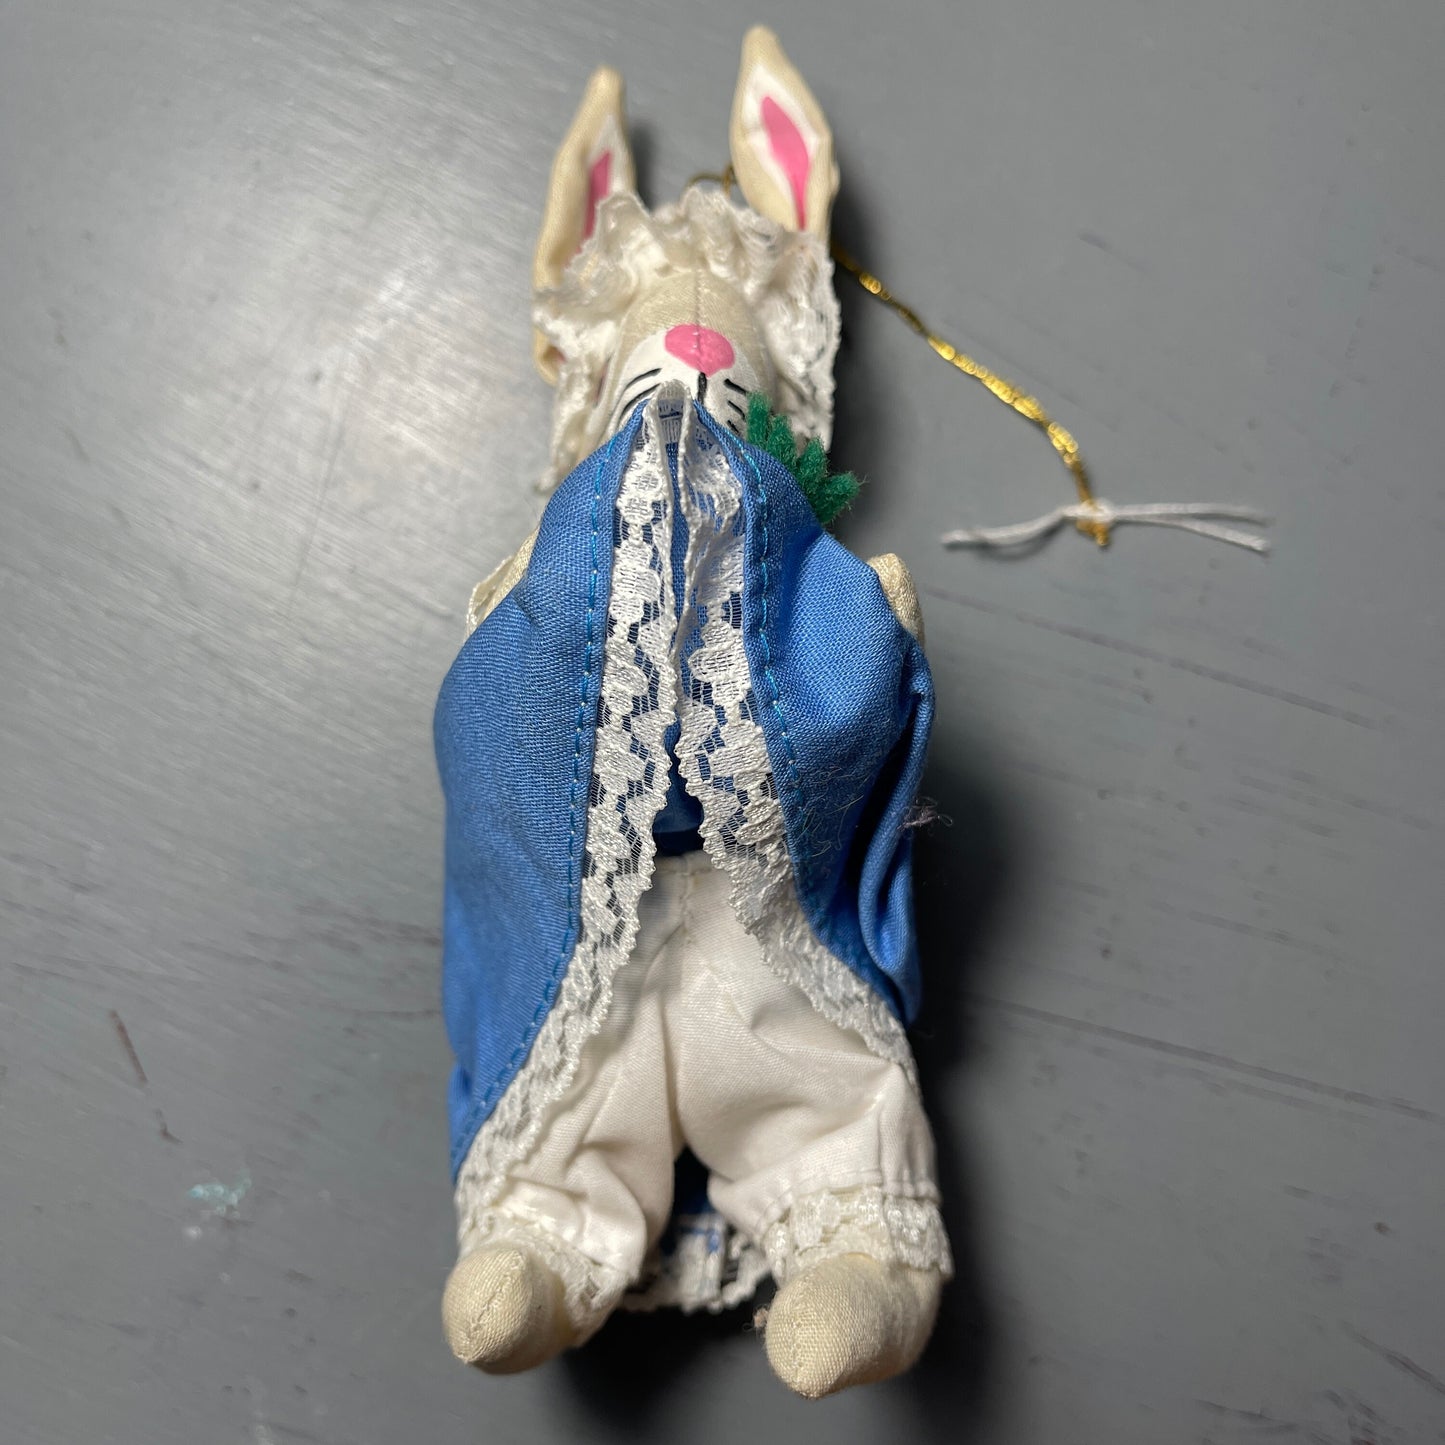 Ravishing Rabbit Lady in Cap and Dress Gathering Carrots Vintage Stuffed Animal Ornament